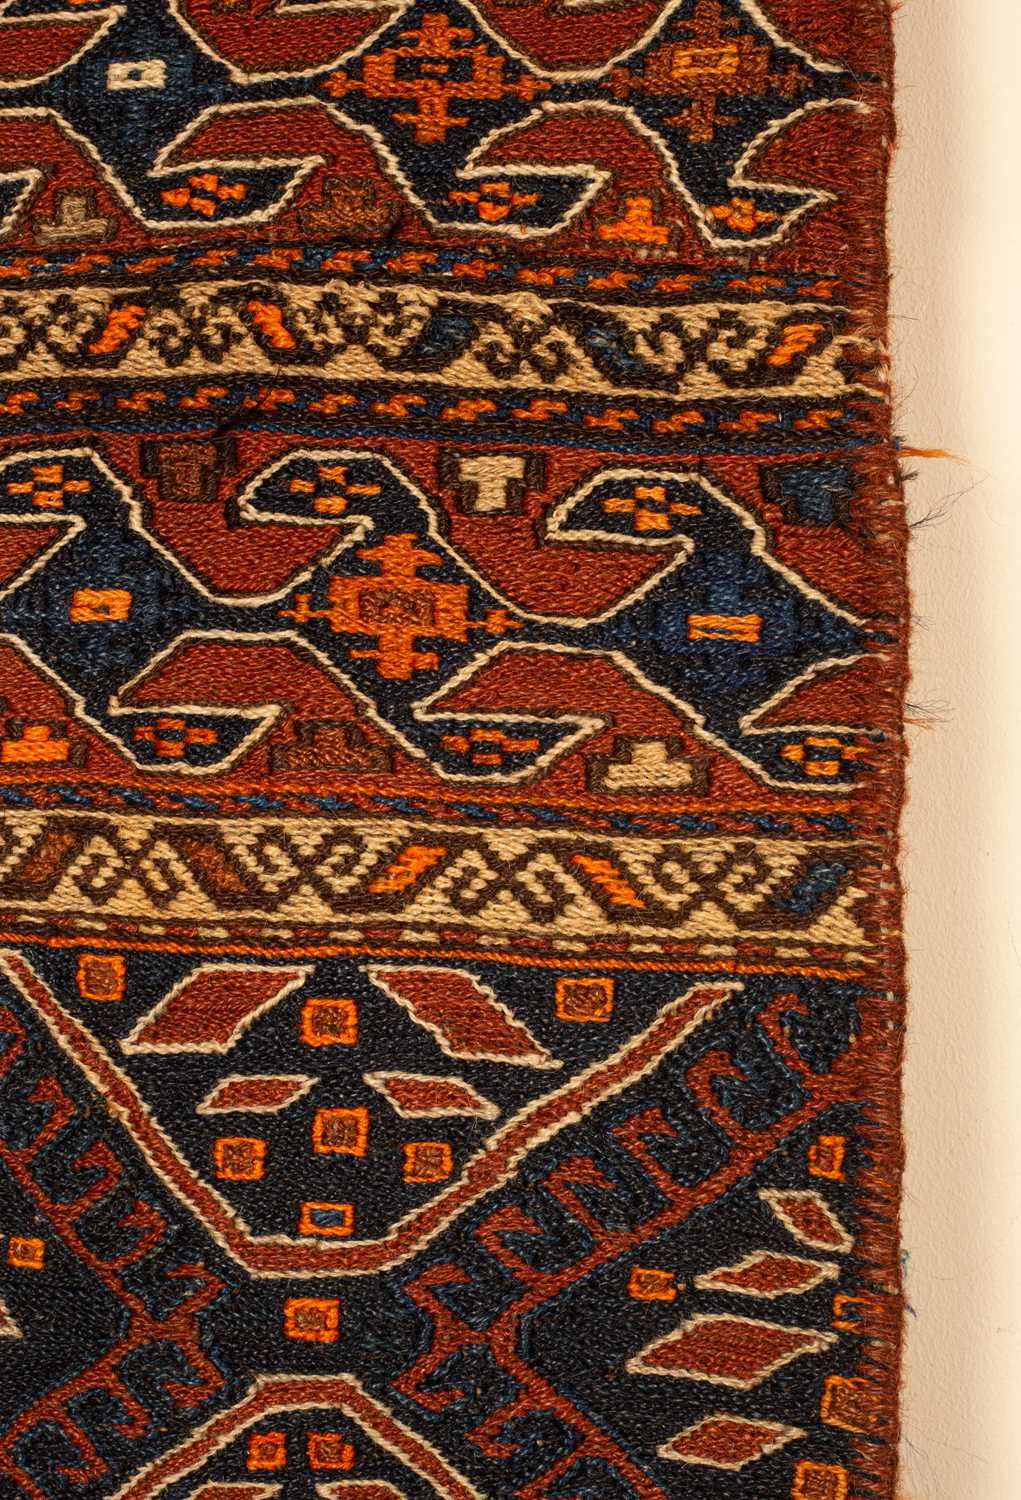 A Soumakh style rug or hanging - Bild 3 aus 8